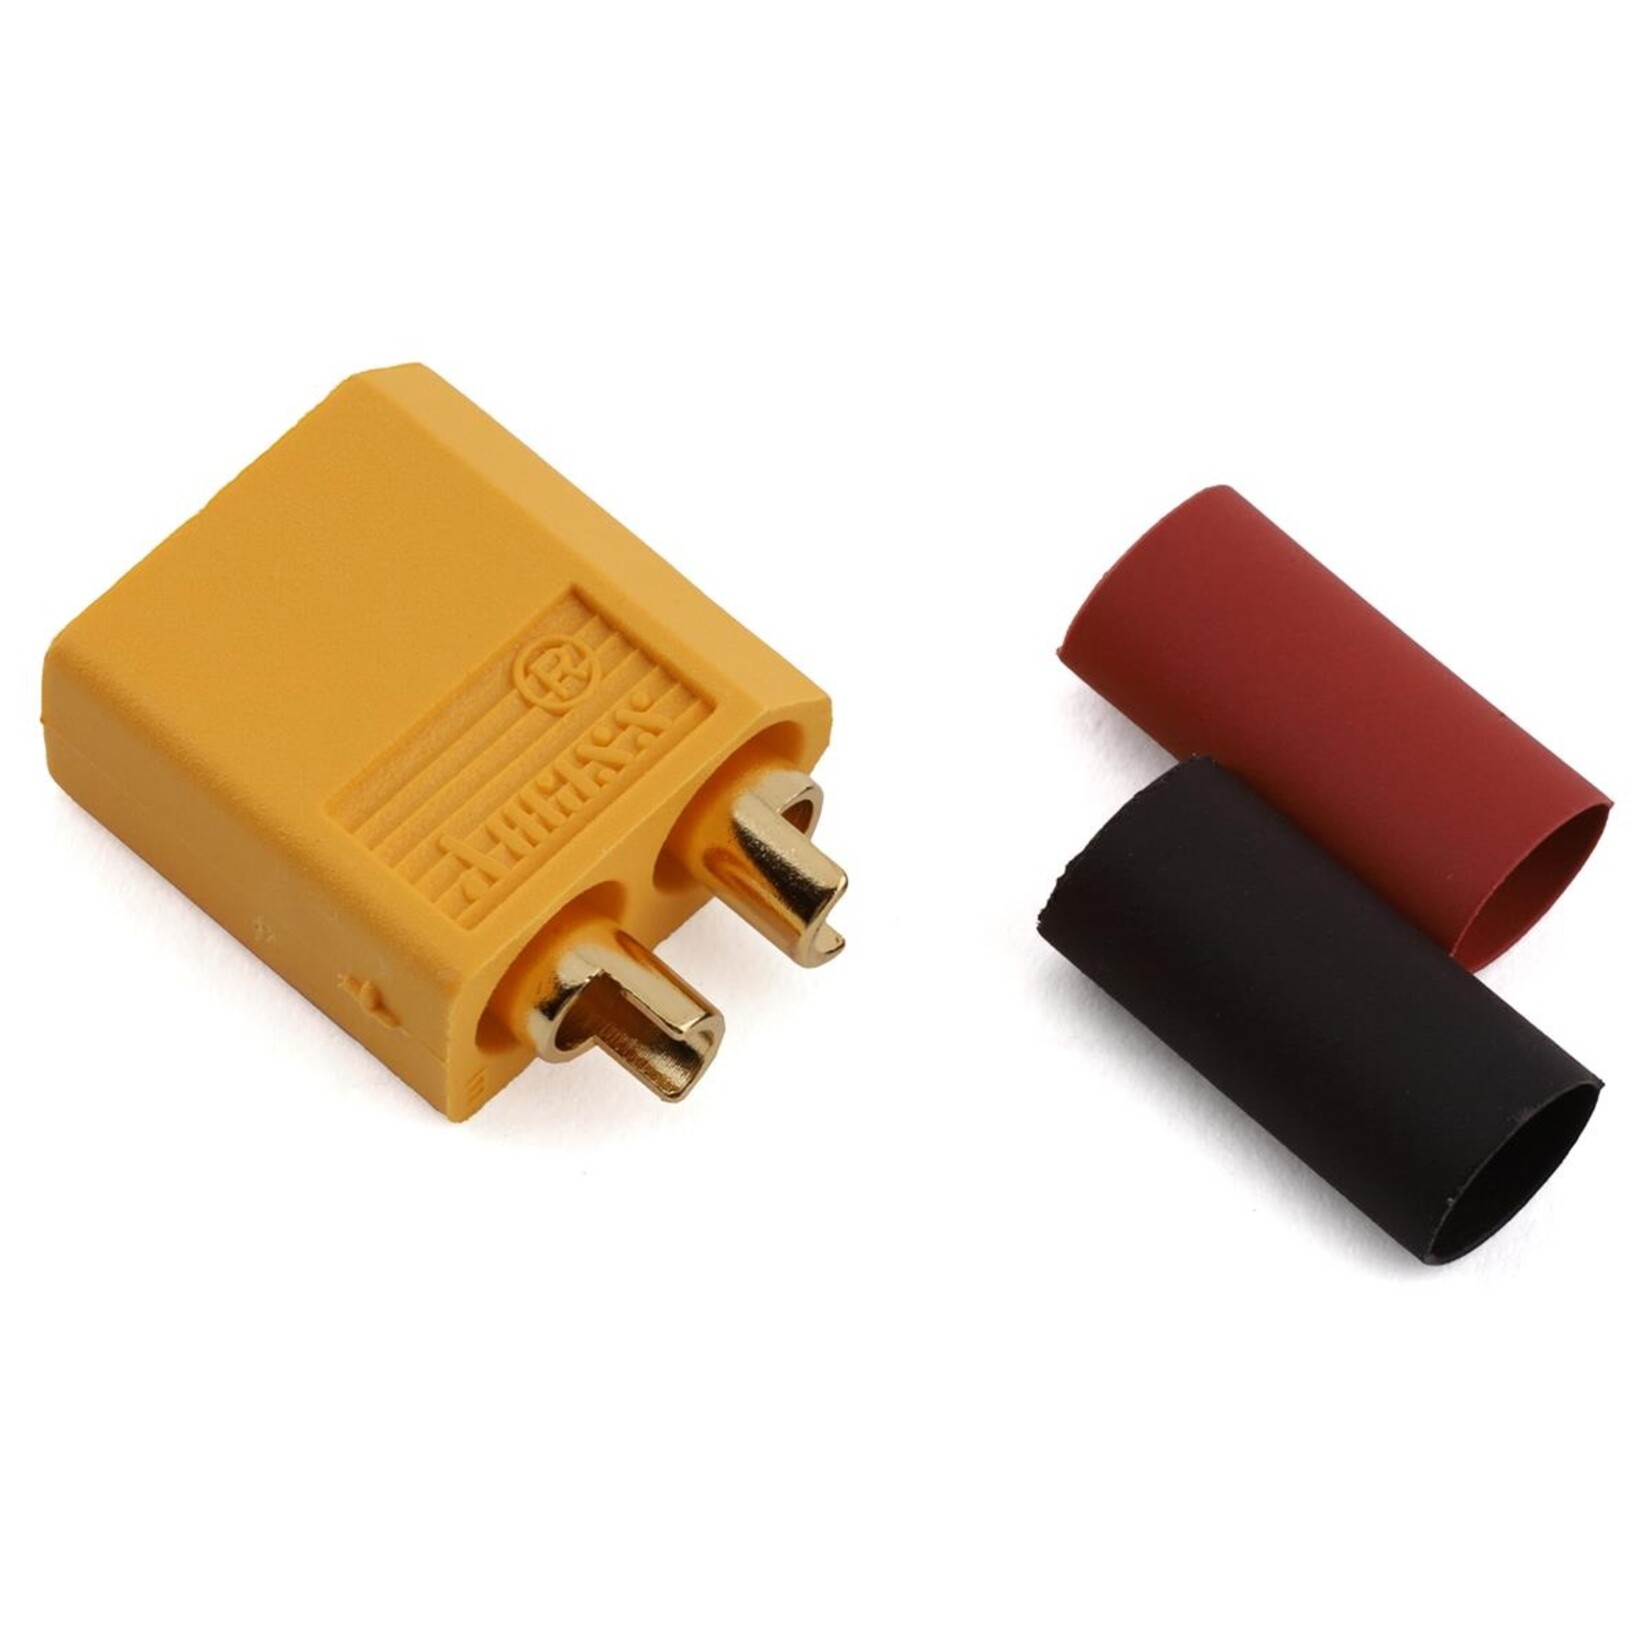 Gens Ace Gens Ace 3s Short-Size LiPo Battery 60C w/XT-60 Connector (11.1V/5000mAh) #GEA50003S60SX